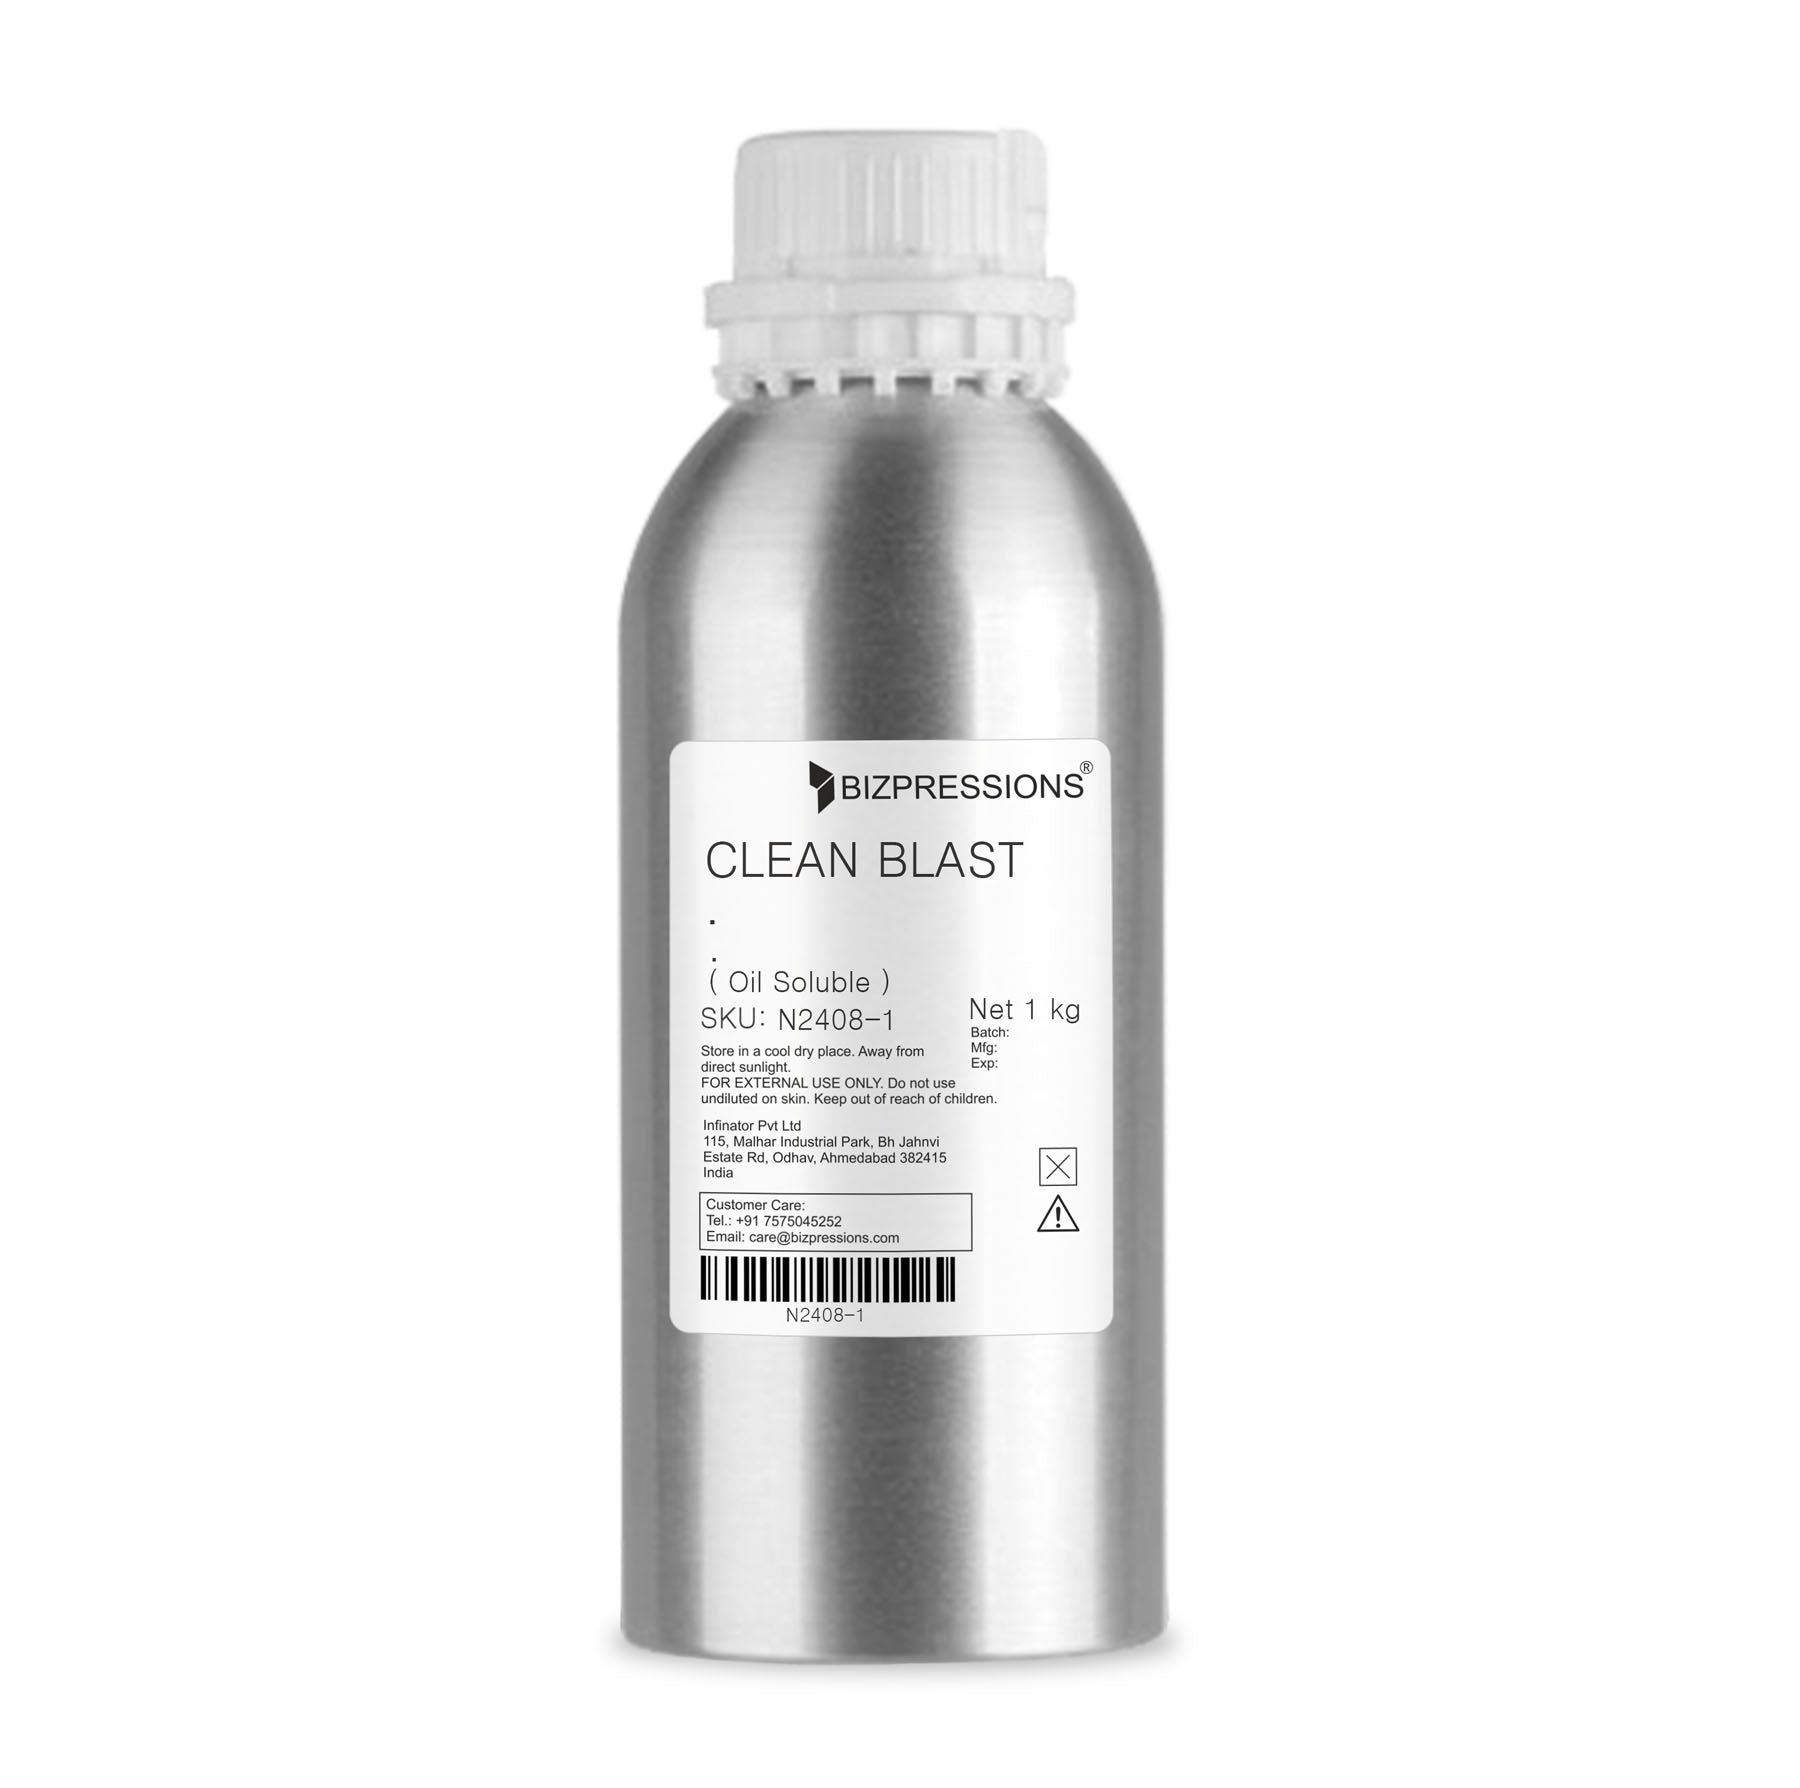 CLEAN BLAST - Fragrance ( Oil Soluble ) - 1 kg